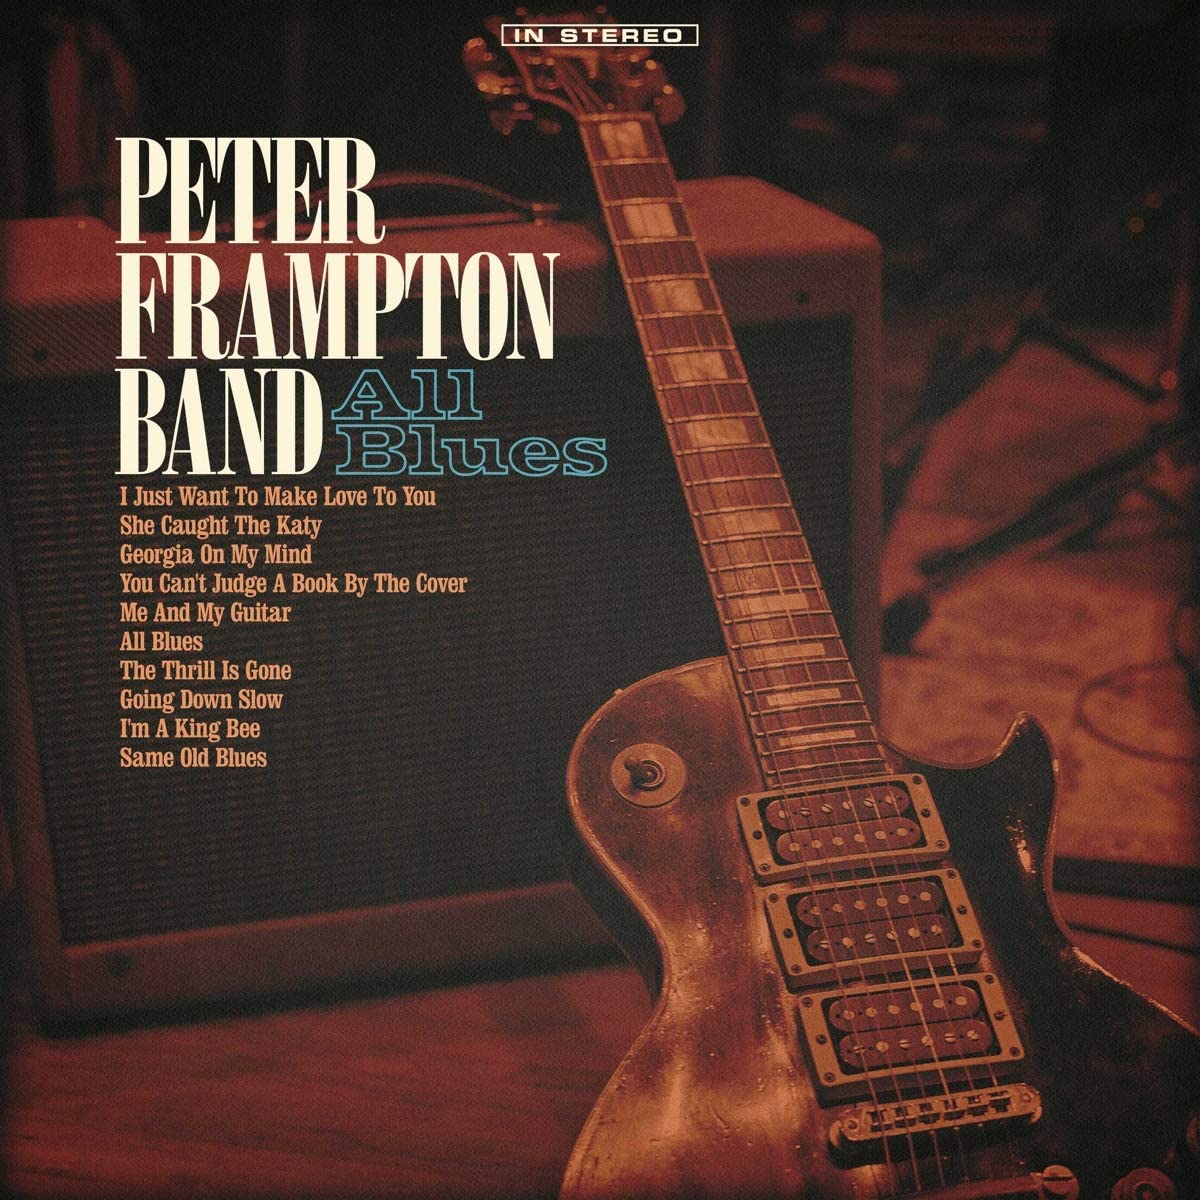 Peter Frampton Band - All Blues (Vinyl LP)